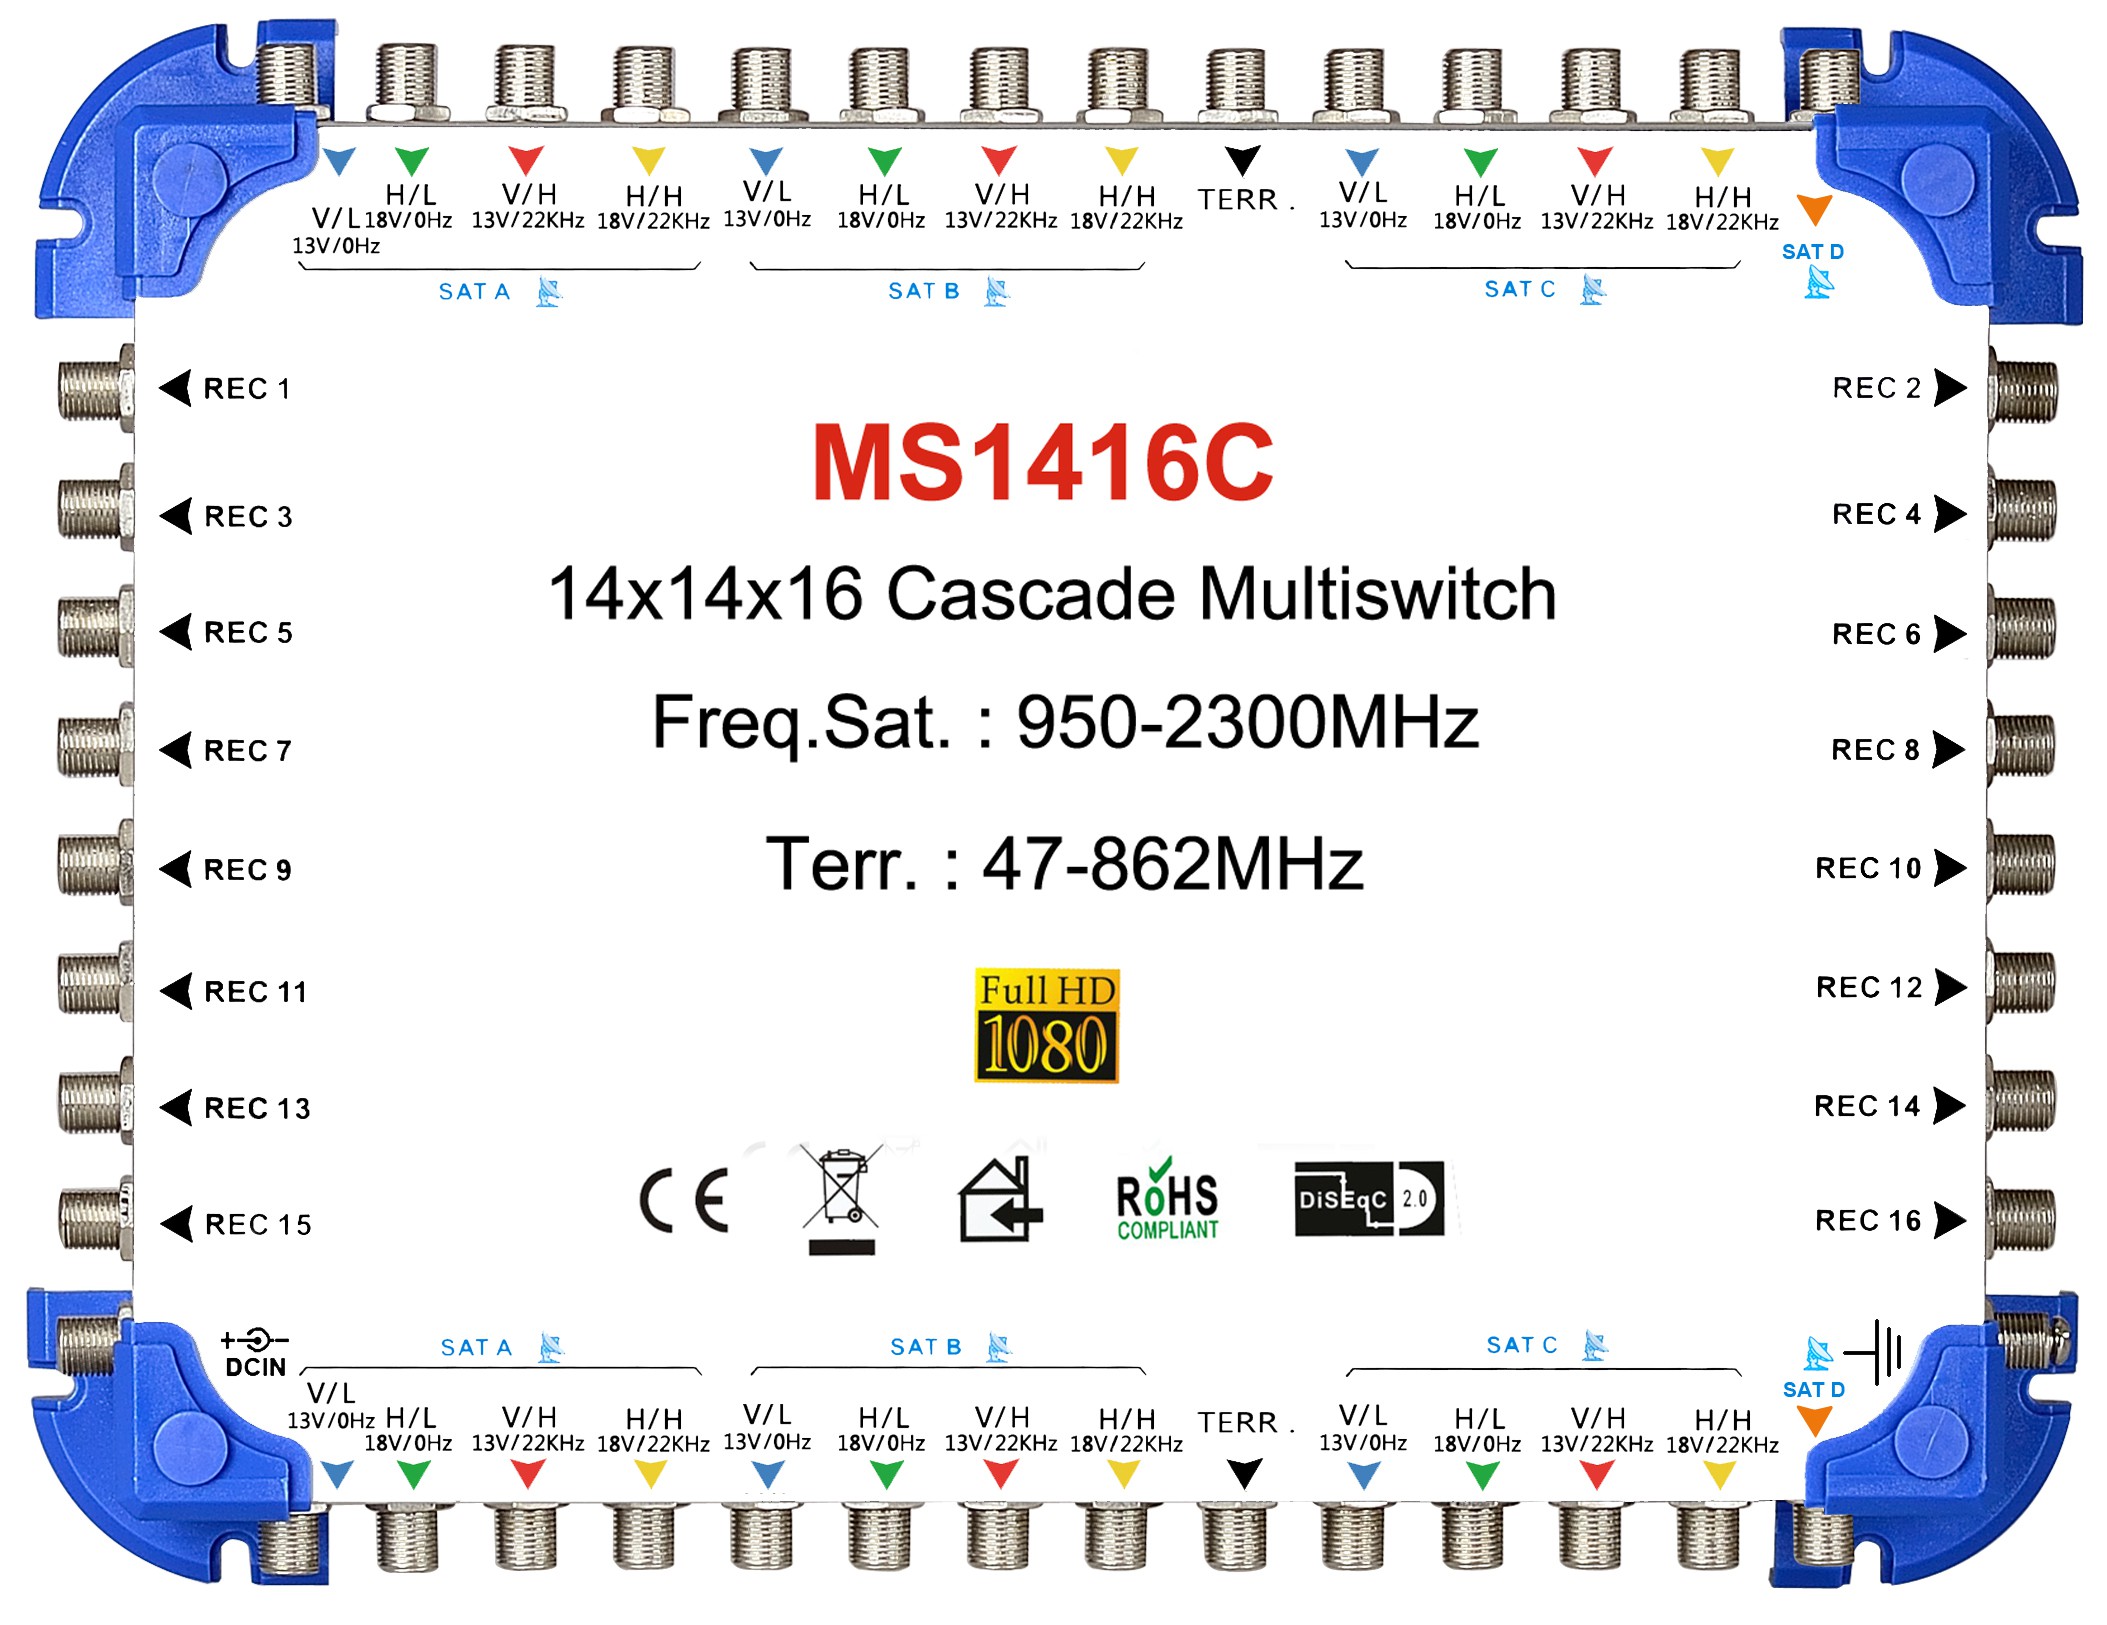 14x16 satellite multi-switch, Cascade multiswitch